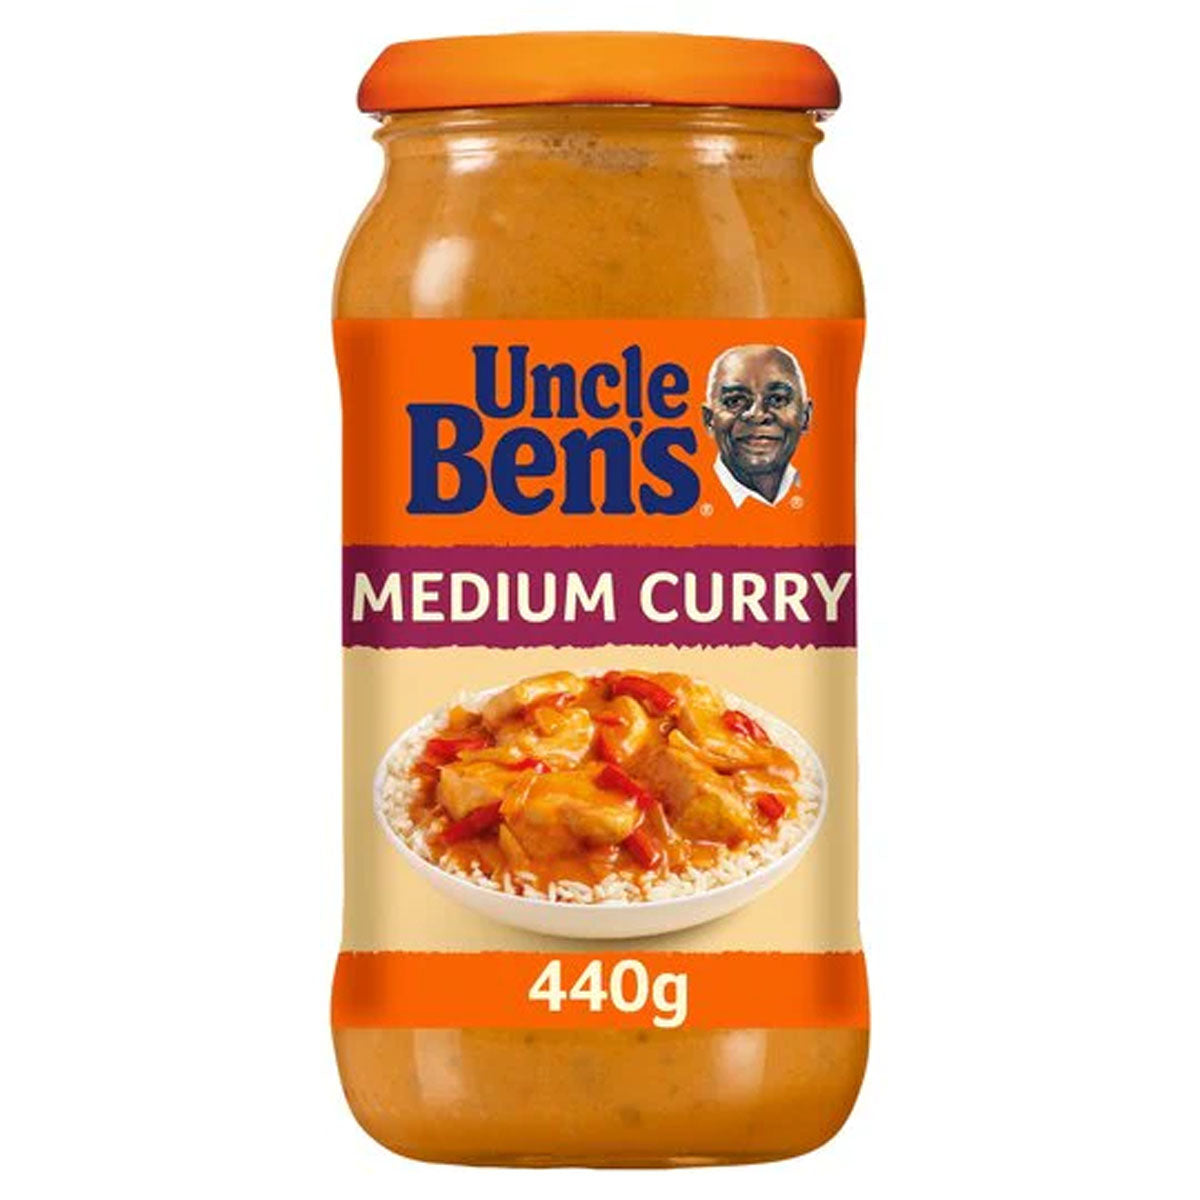 Uncle Ben's - Medium Curry Sauce - 440g.